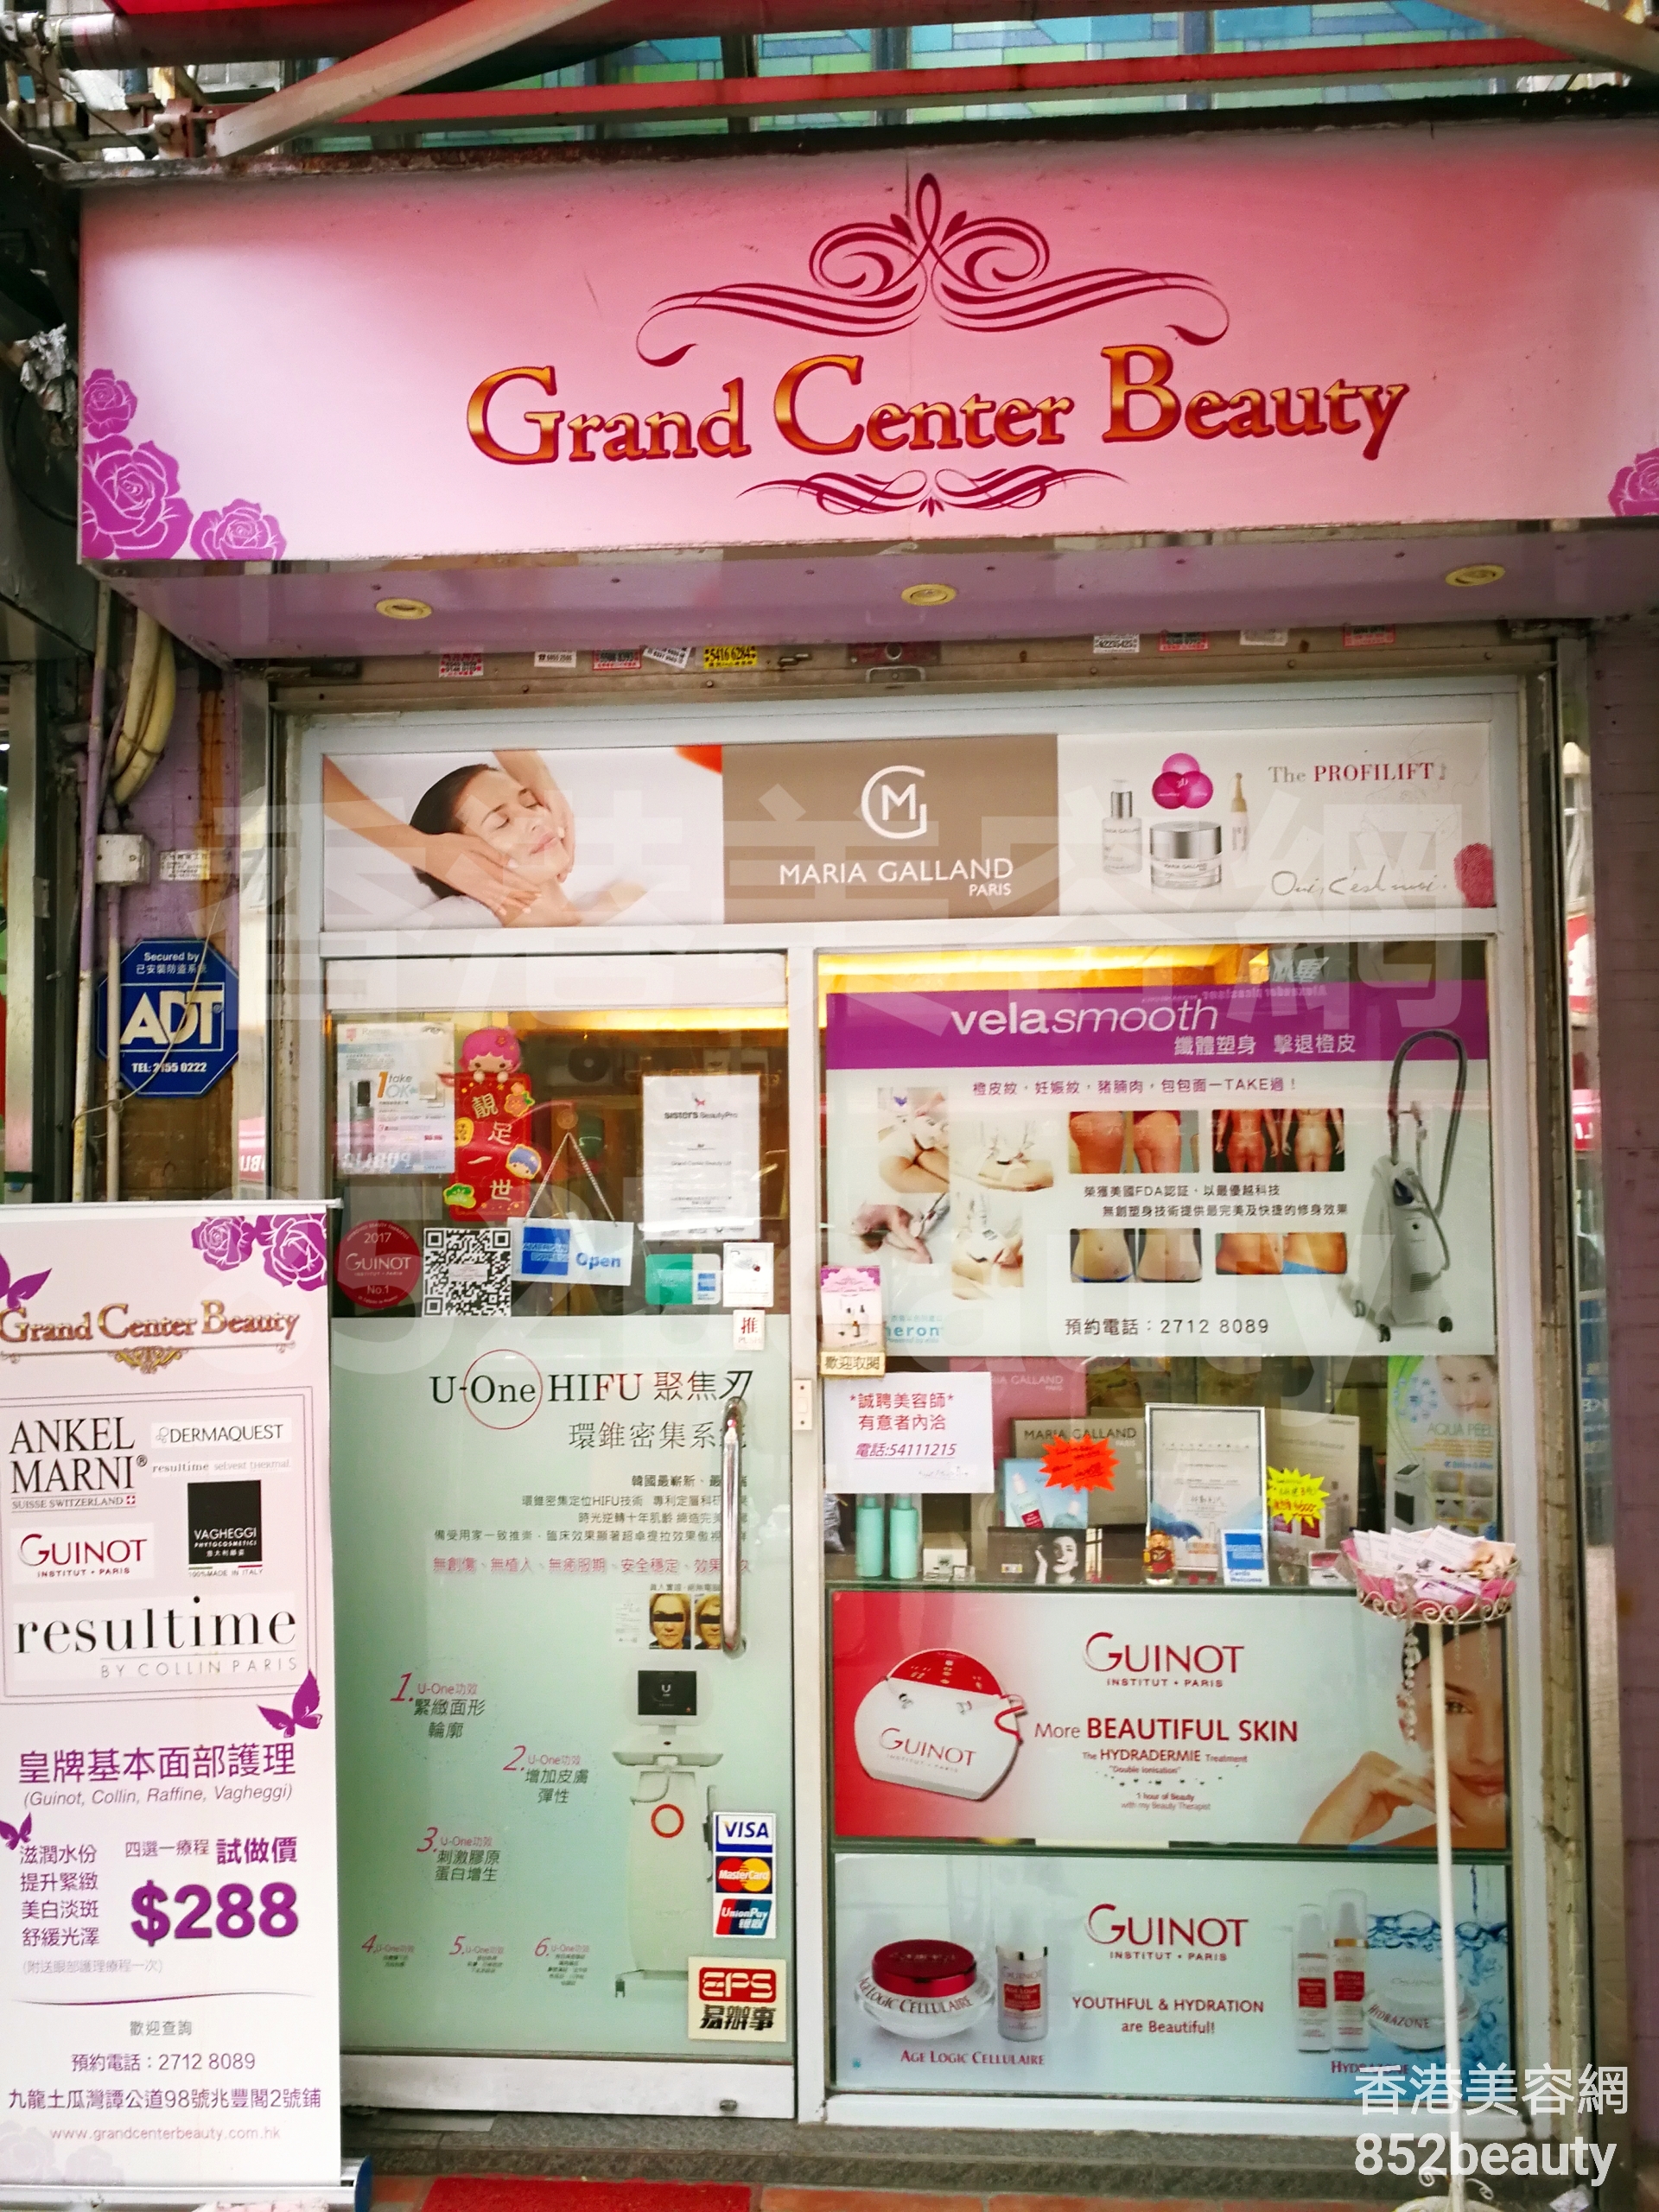 Hong Kong Beauty Salon Beauty Salon / Beautician: Grand Center Beauty